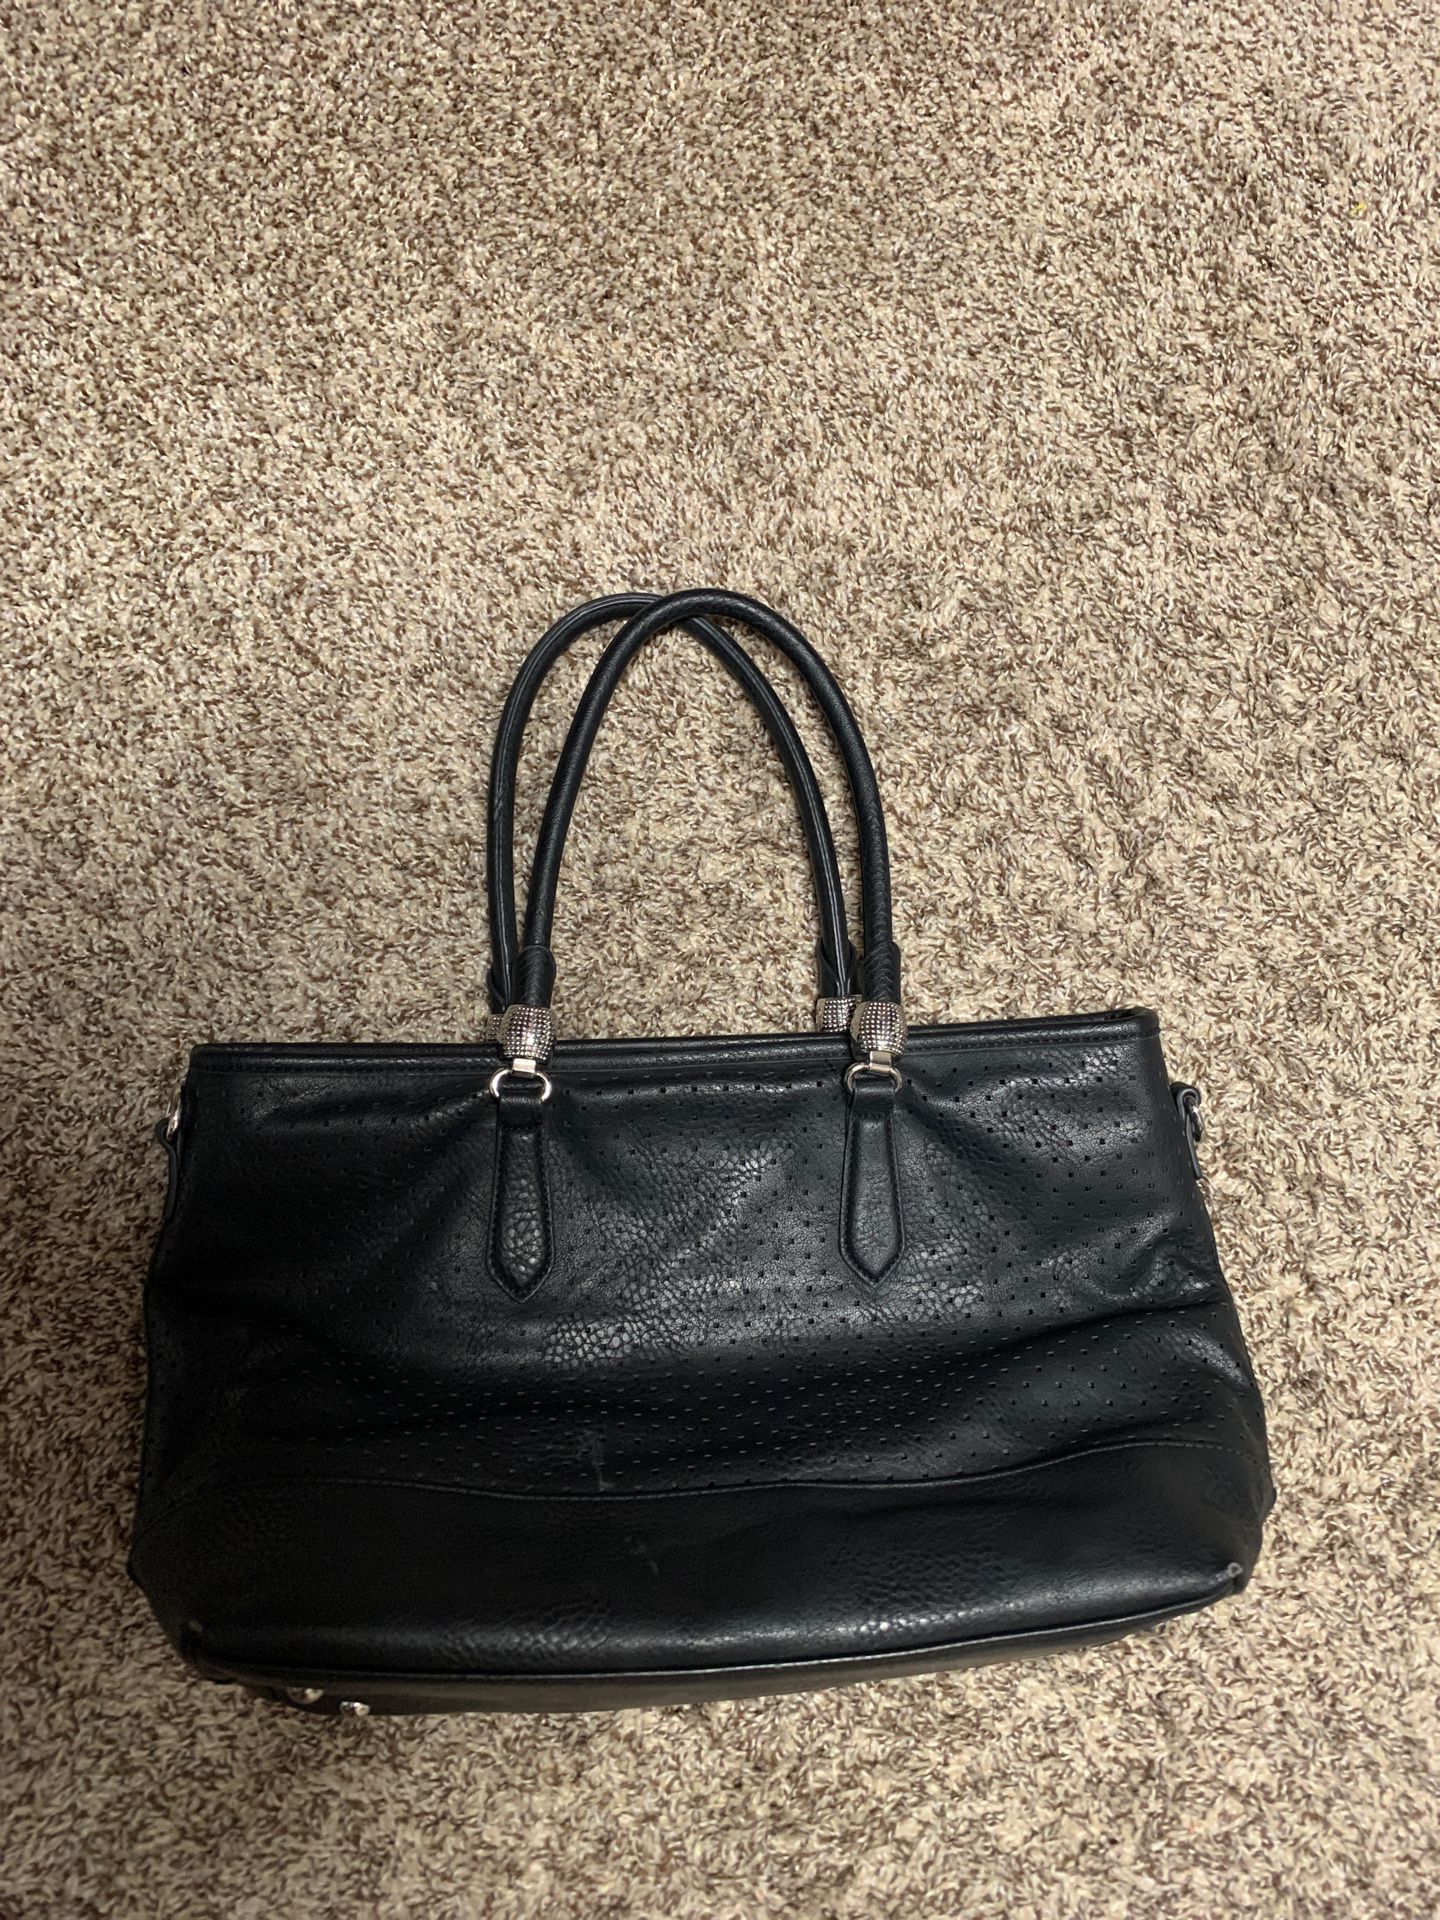 Black large purse